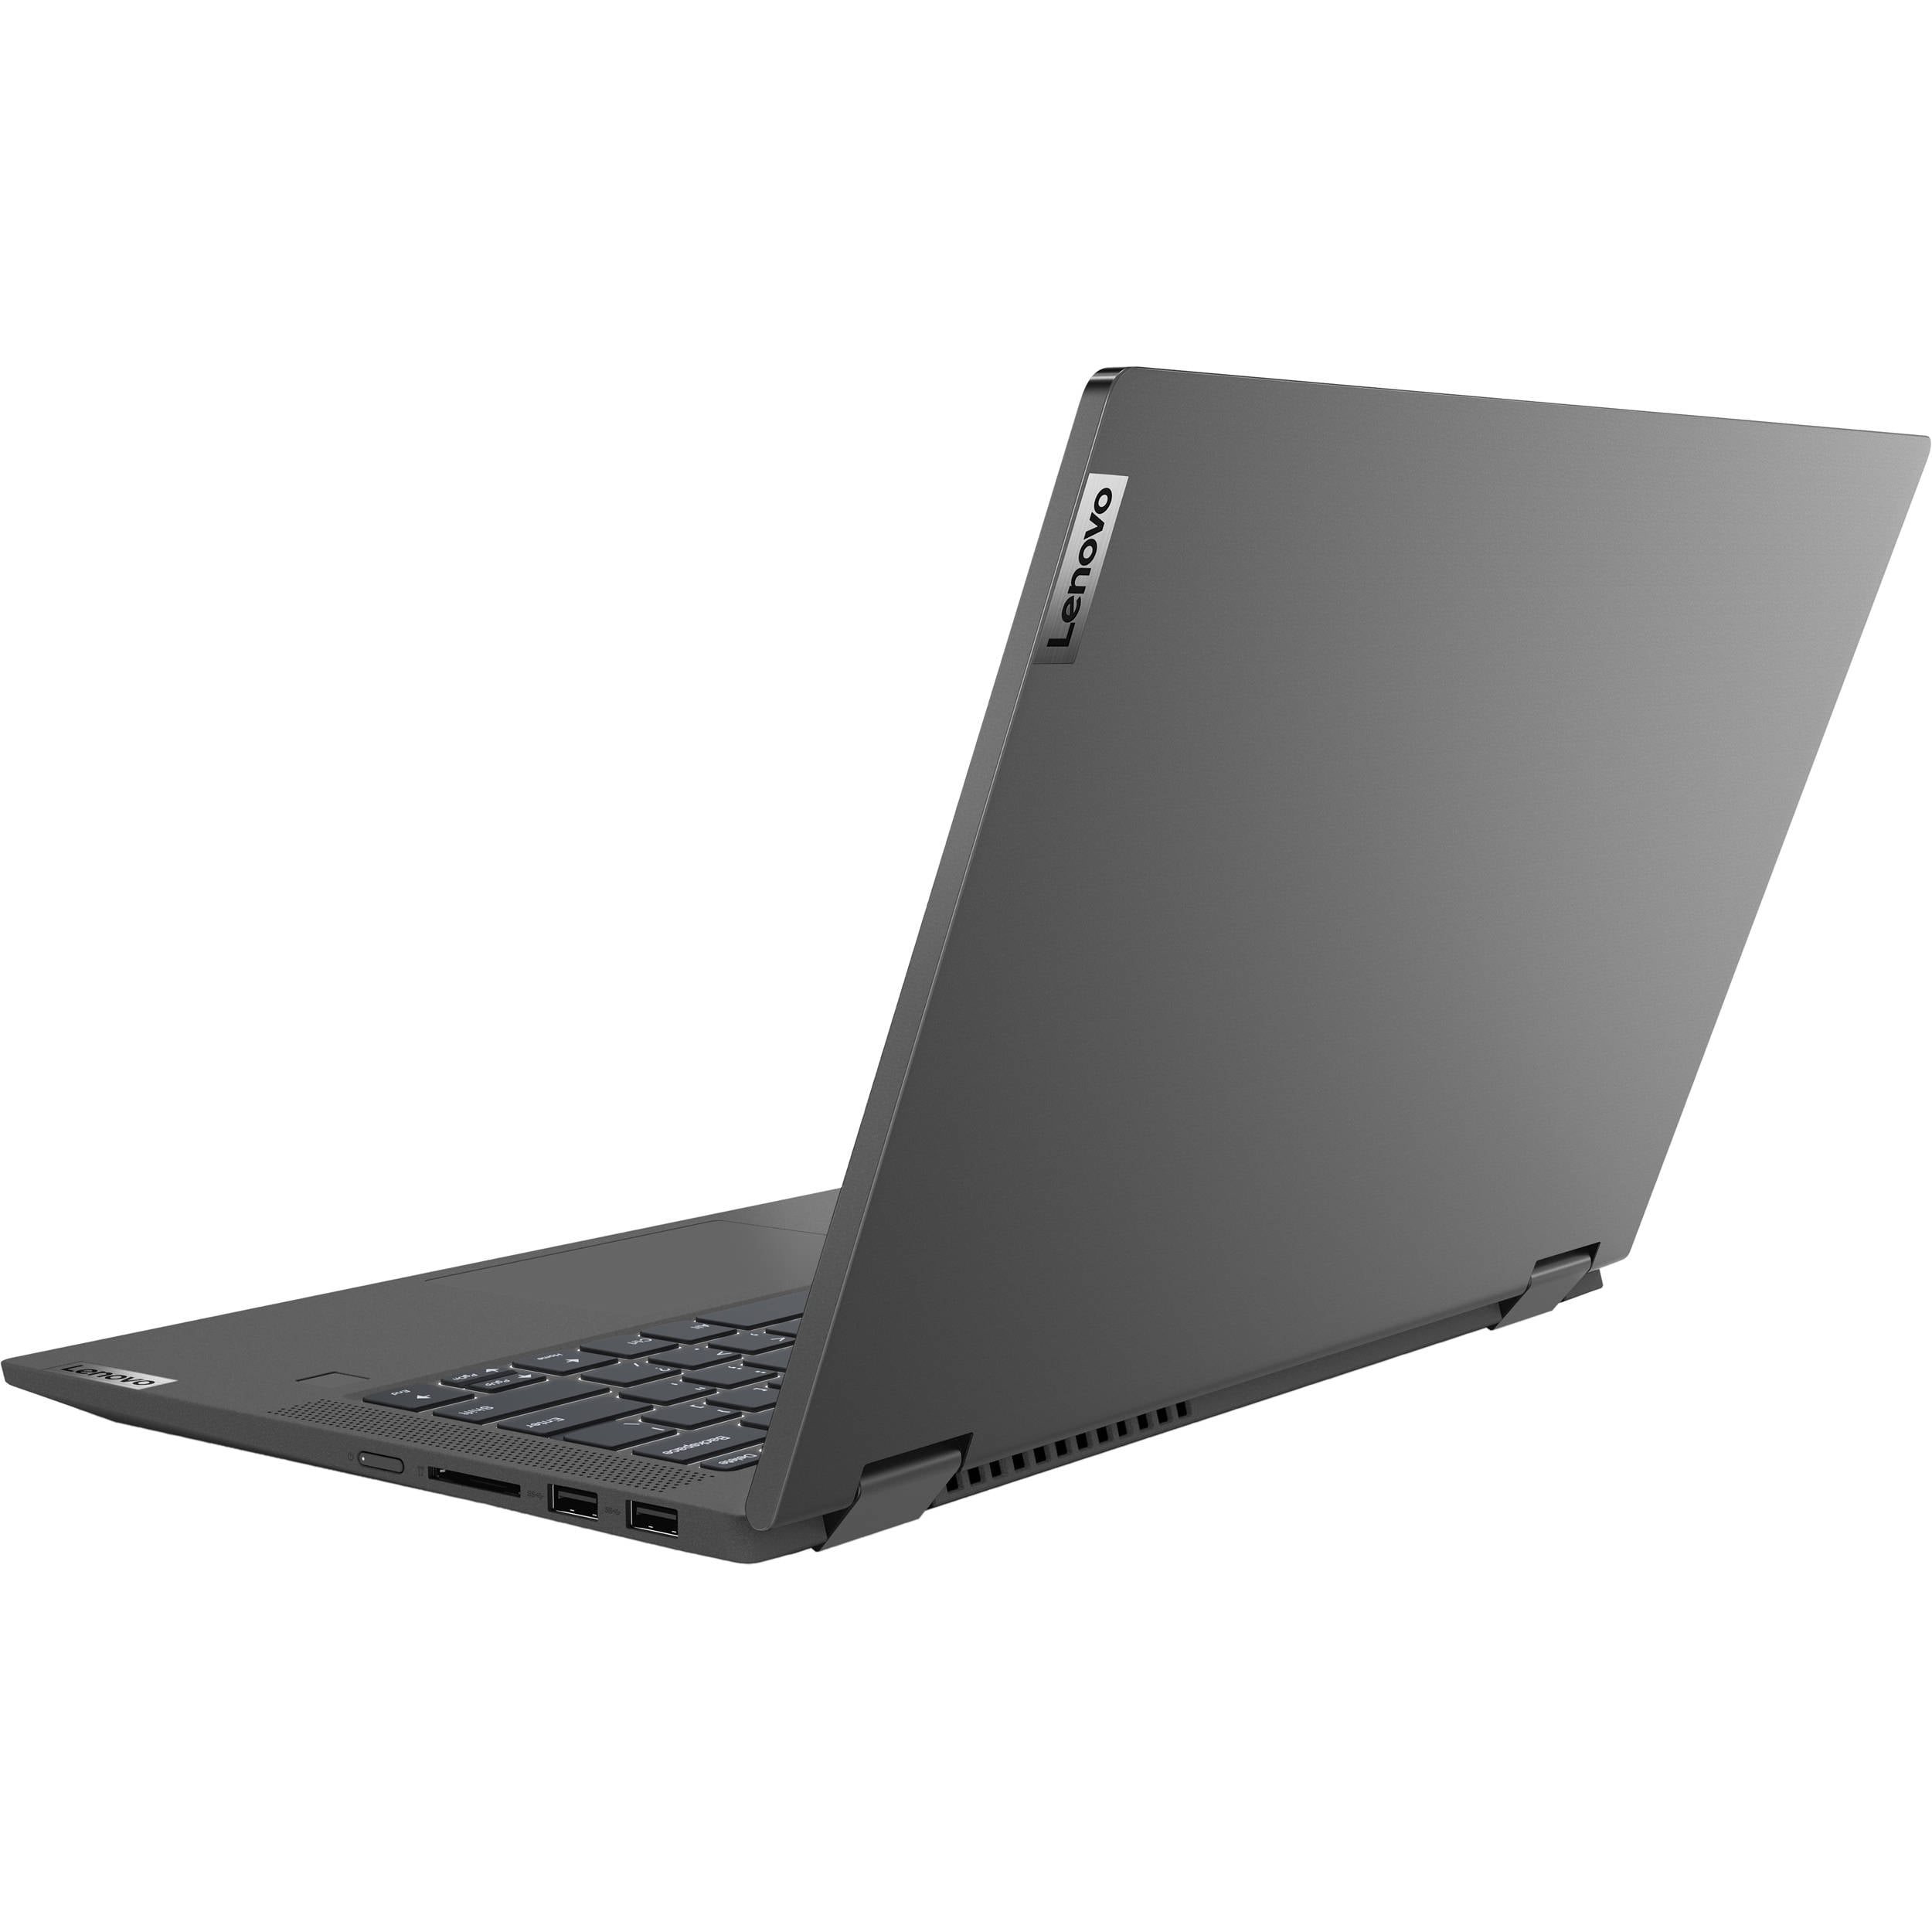 Lenovo IdeaPad Flex 5 AMD Laptop, 14.0